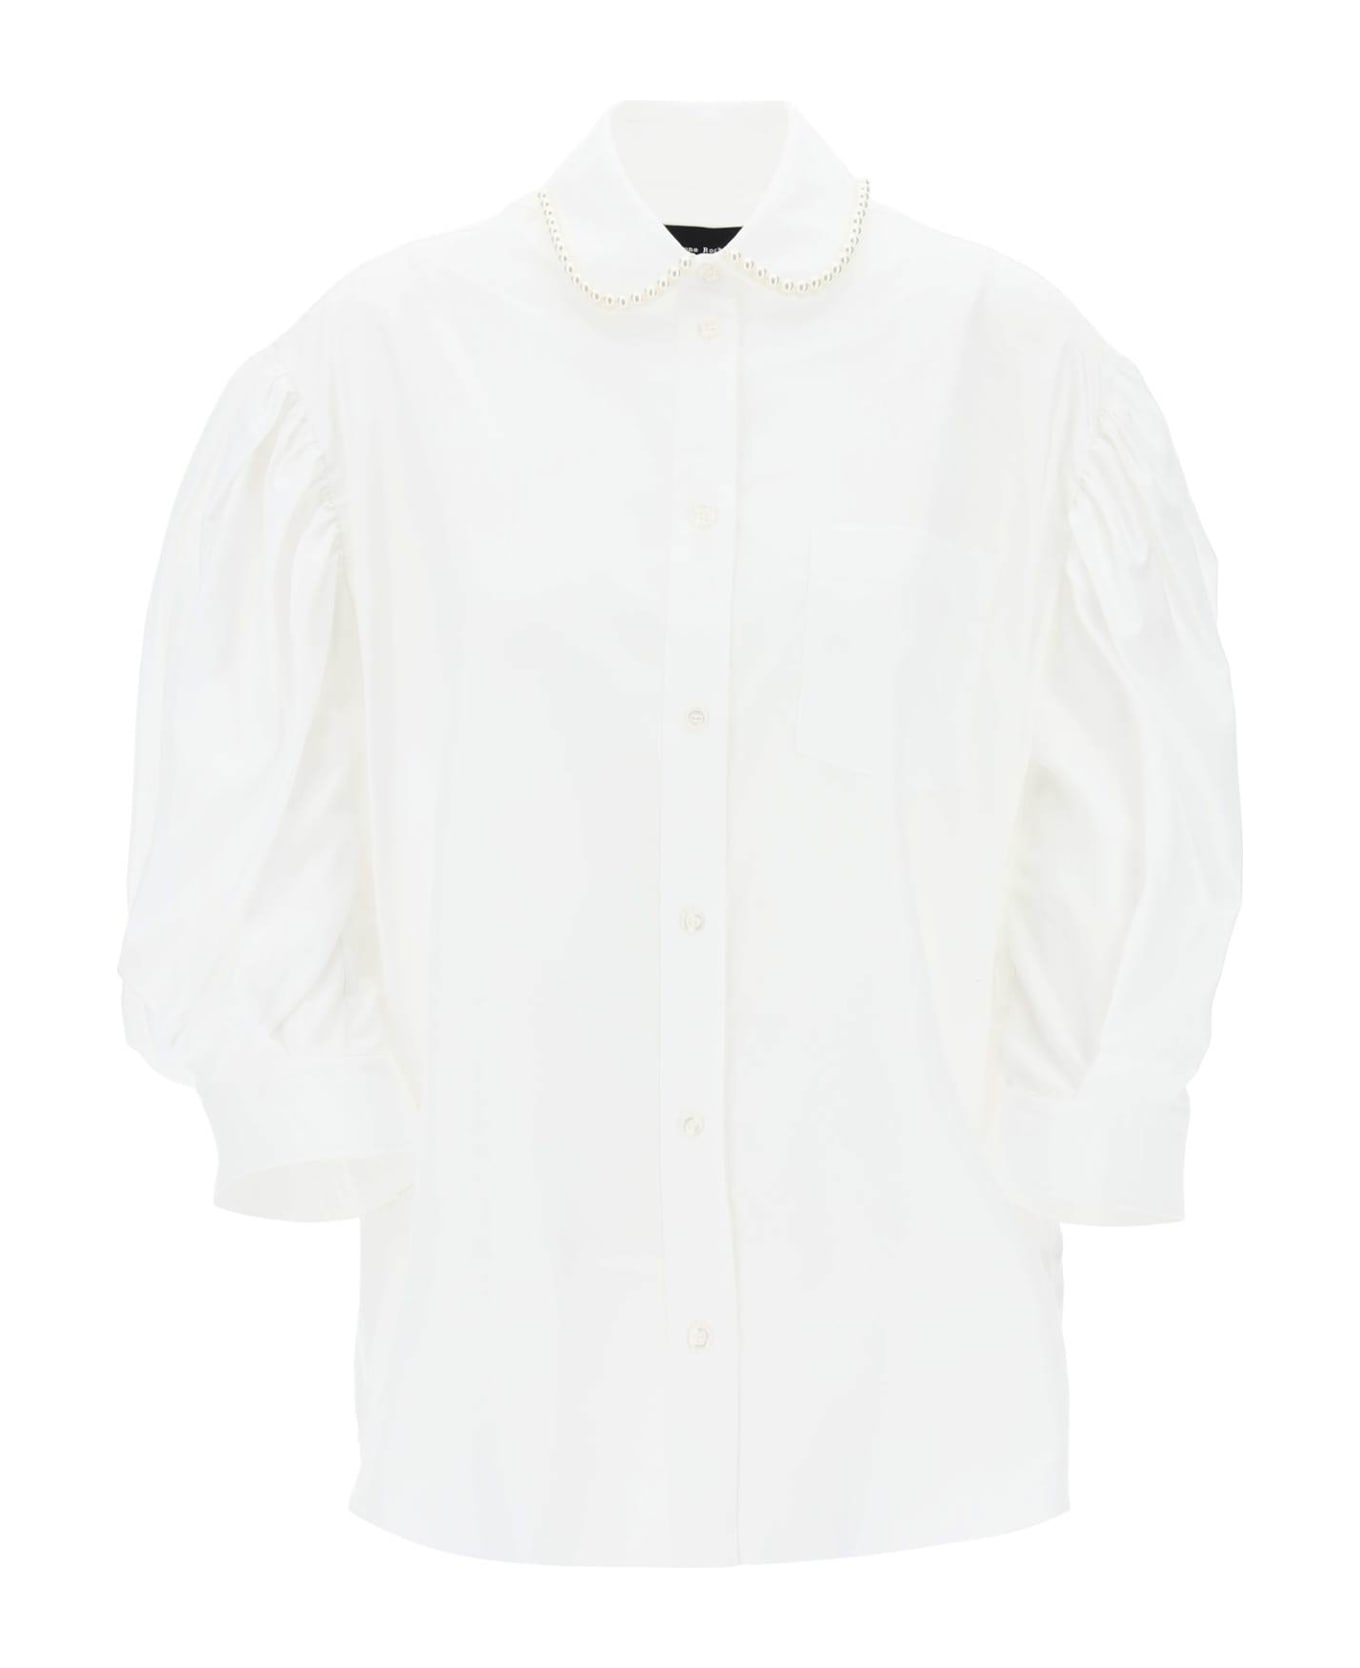 Simone Rocha Puff Sleeve Shirt With Embellishment - WHITE PEARL (White) シャツ